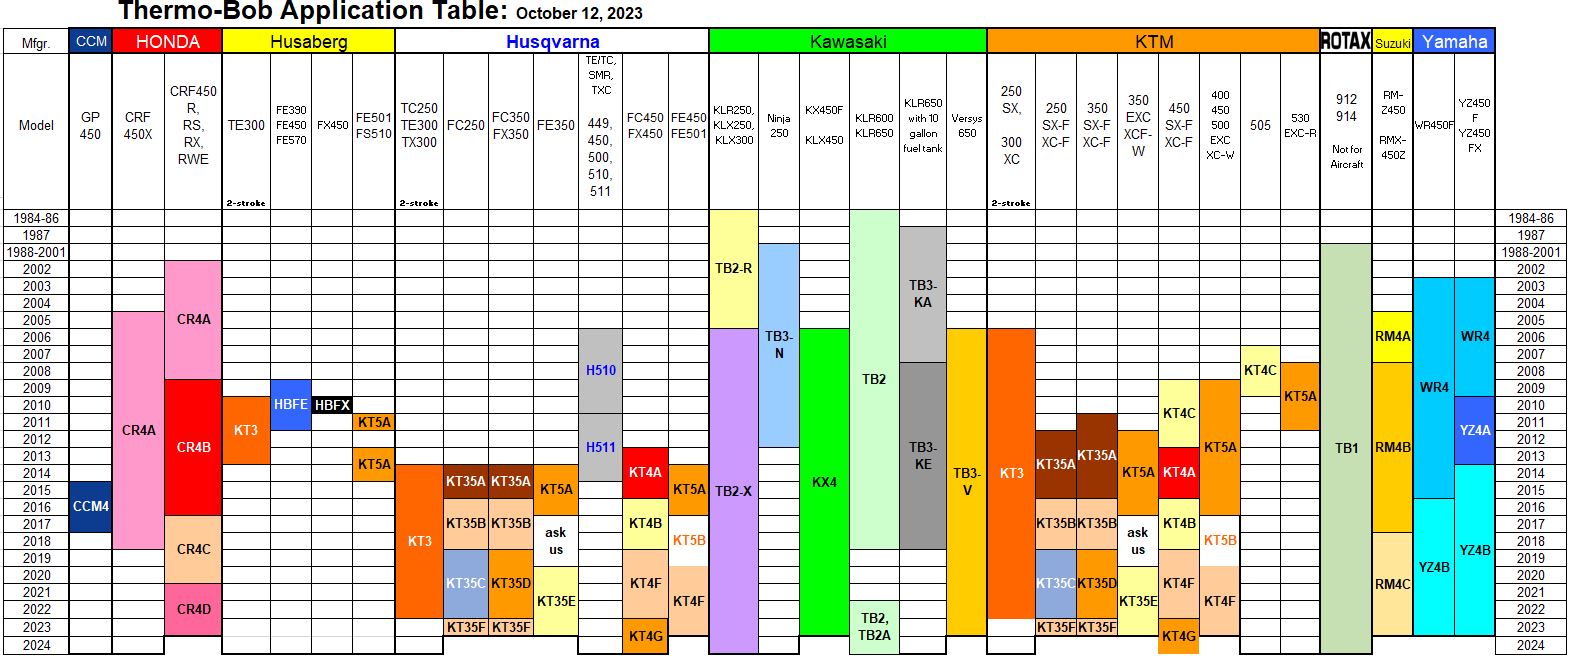 Thermo-Bob Application Table 20231012